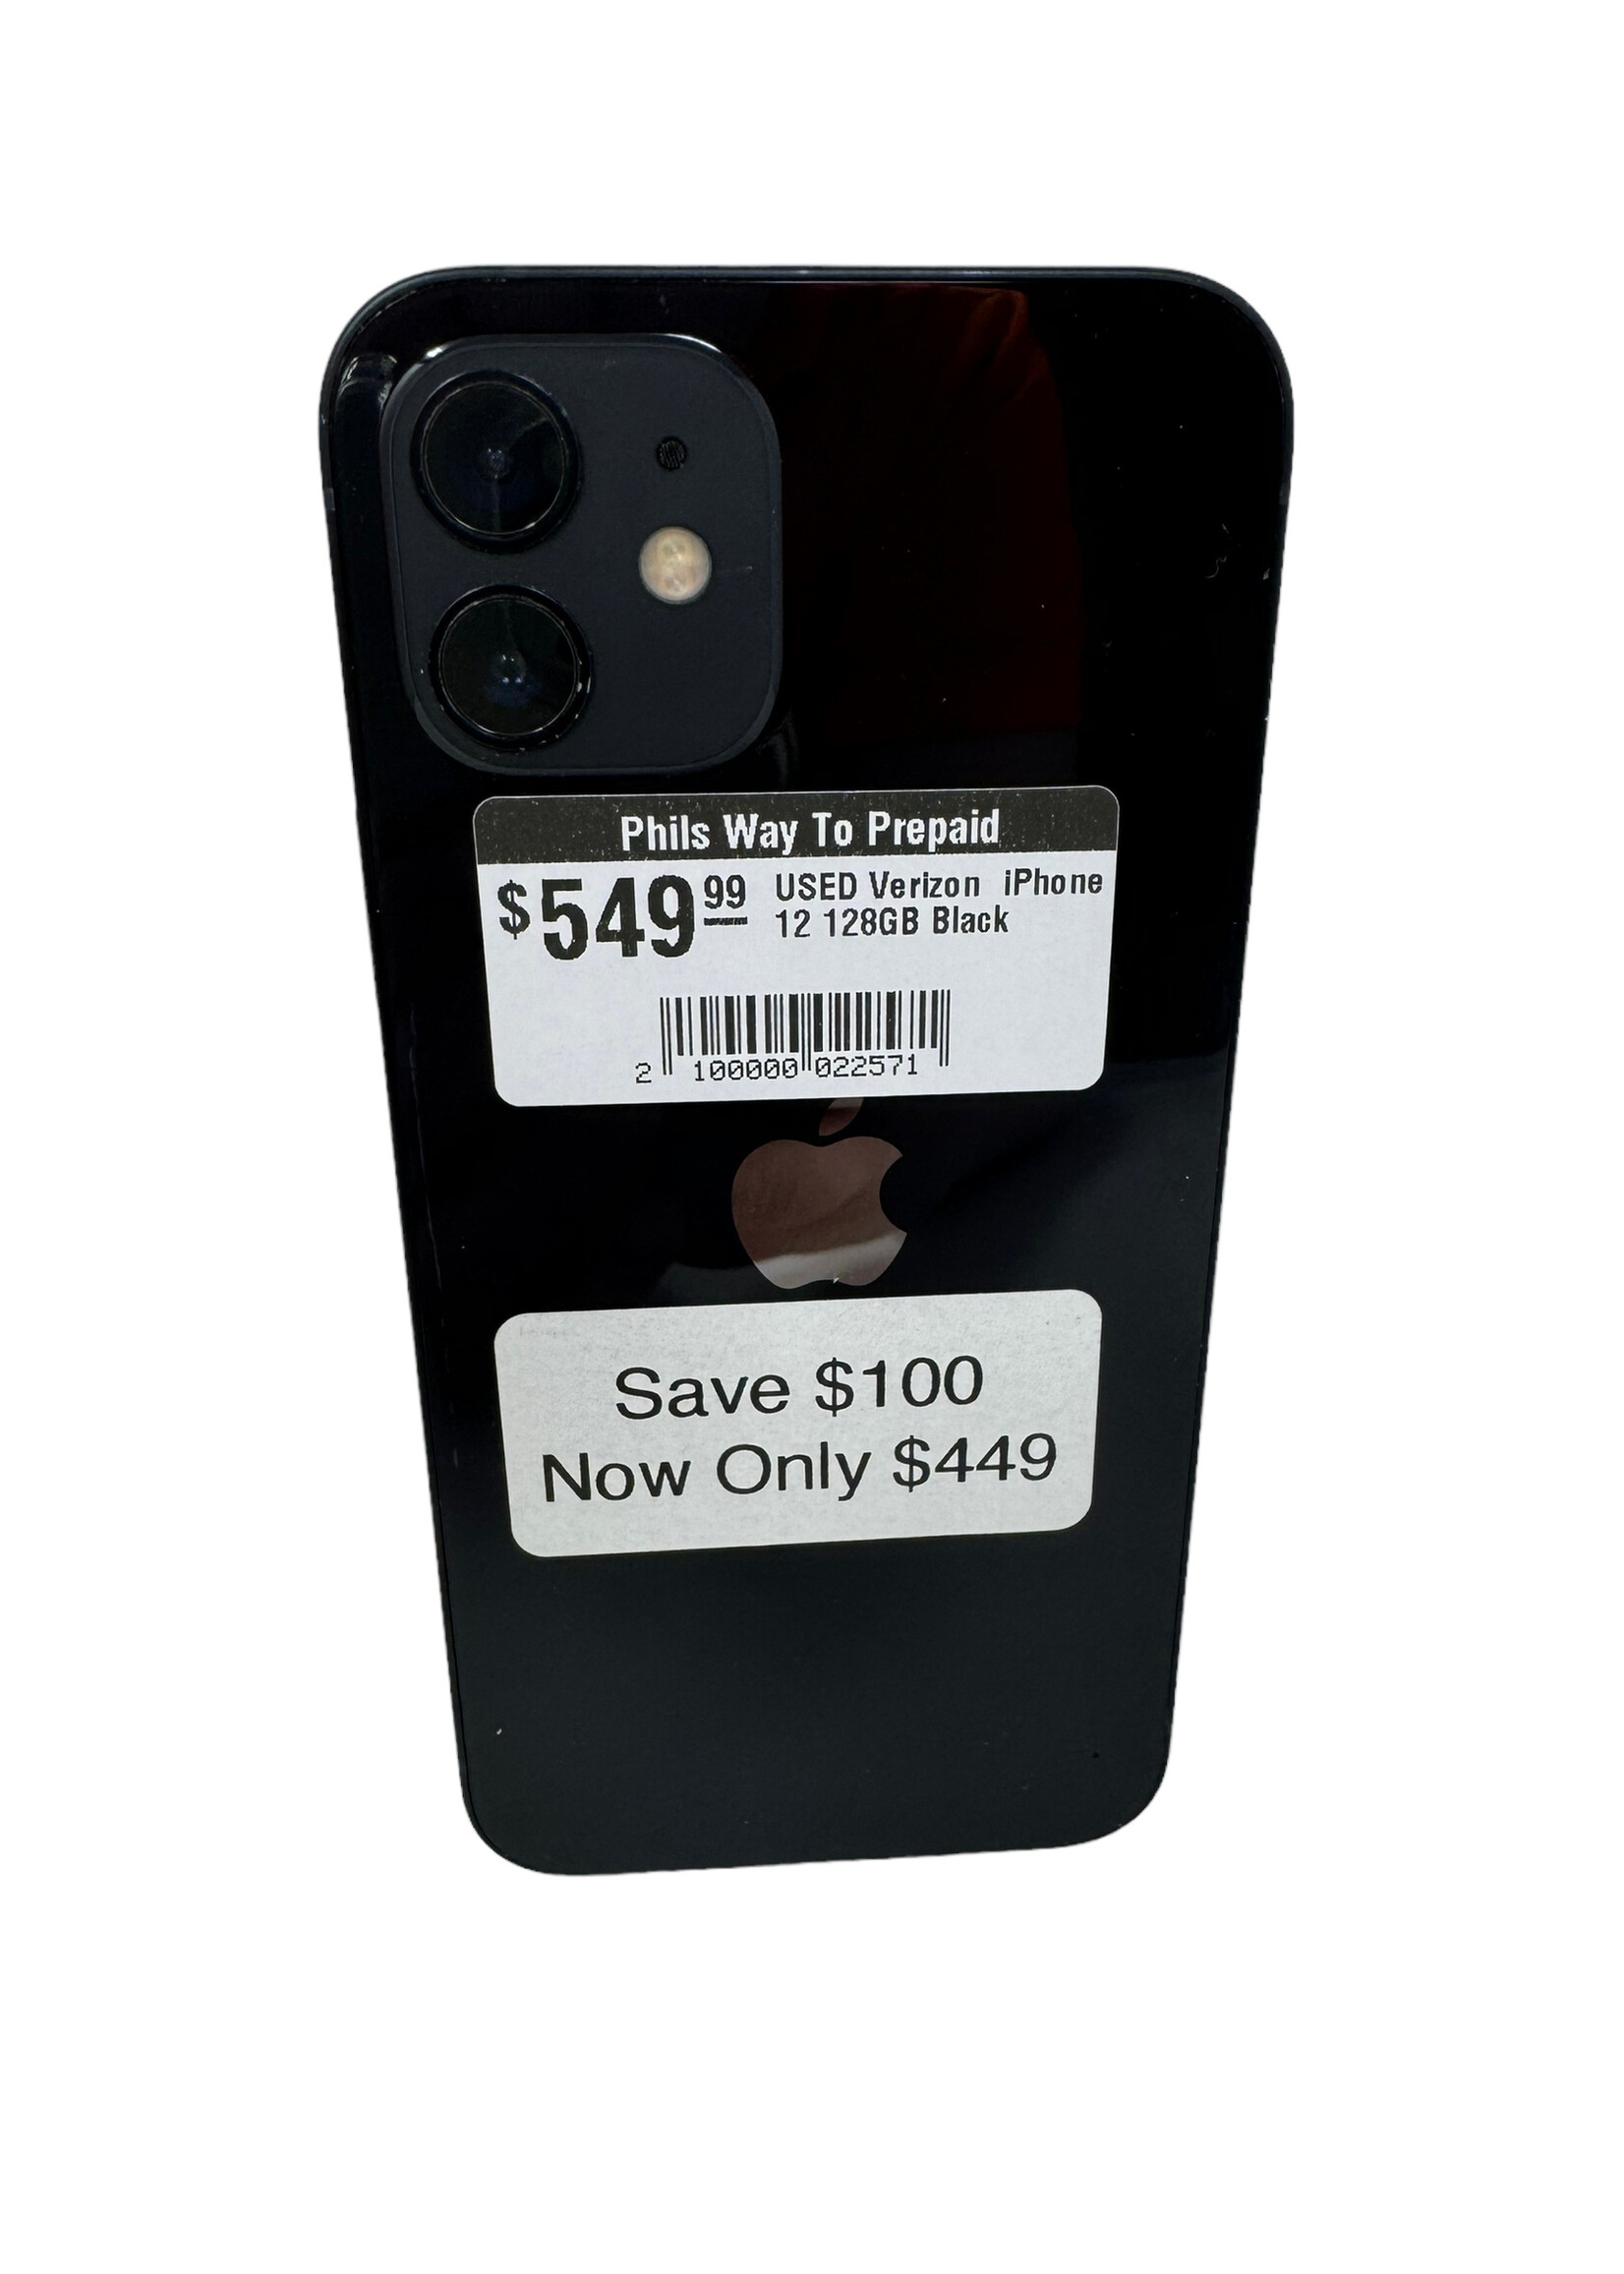 USED Verizon iPhone 12 128GB Black - Phils Way To Prepaid